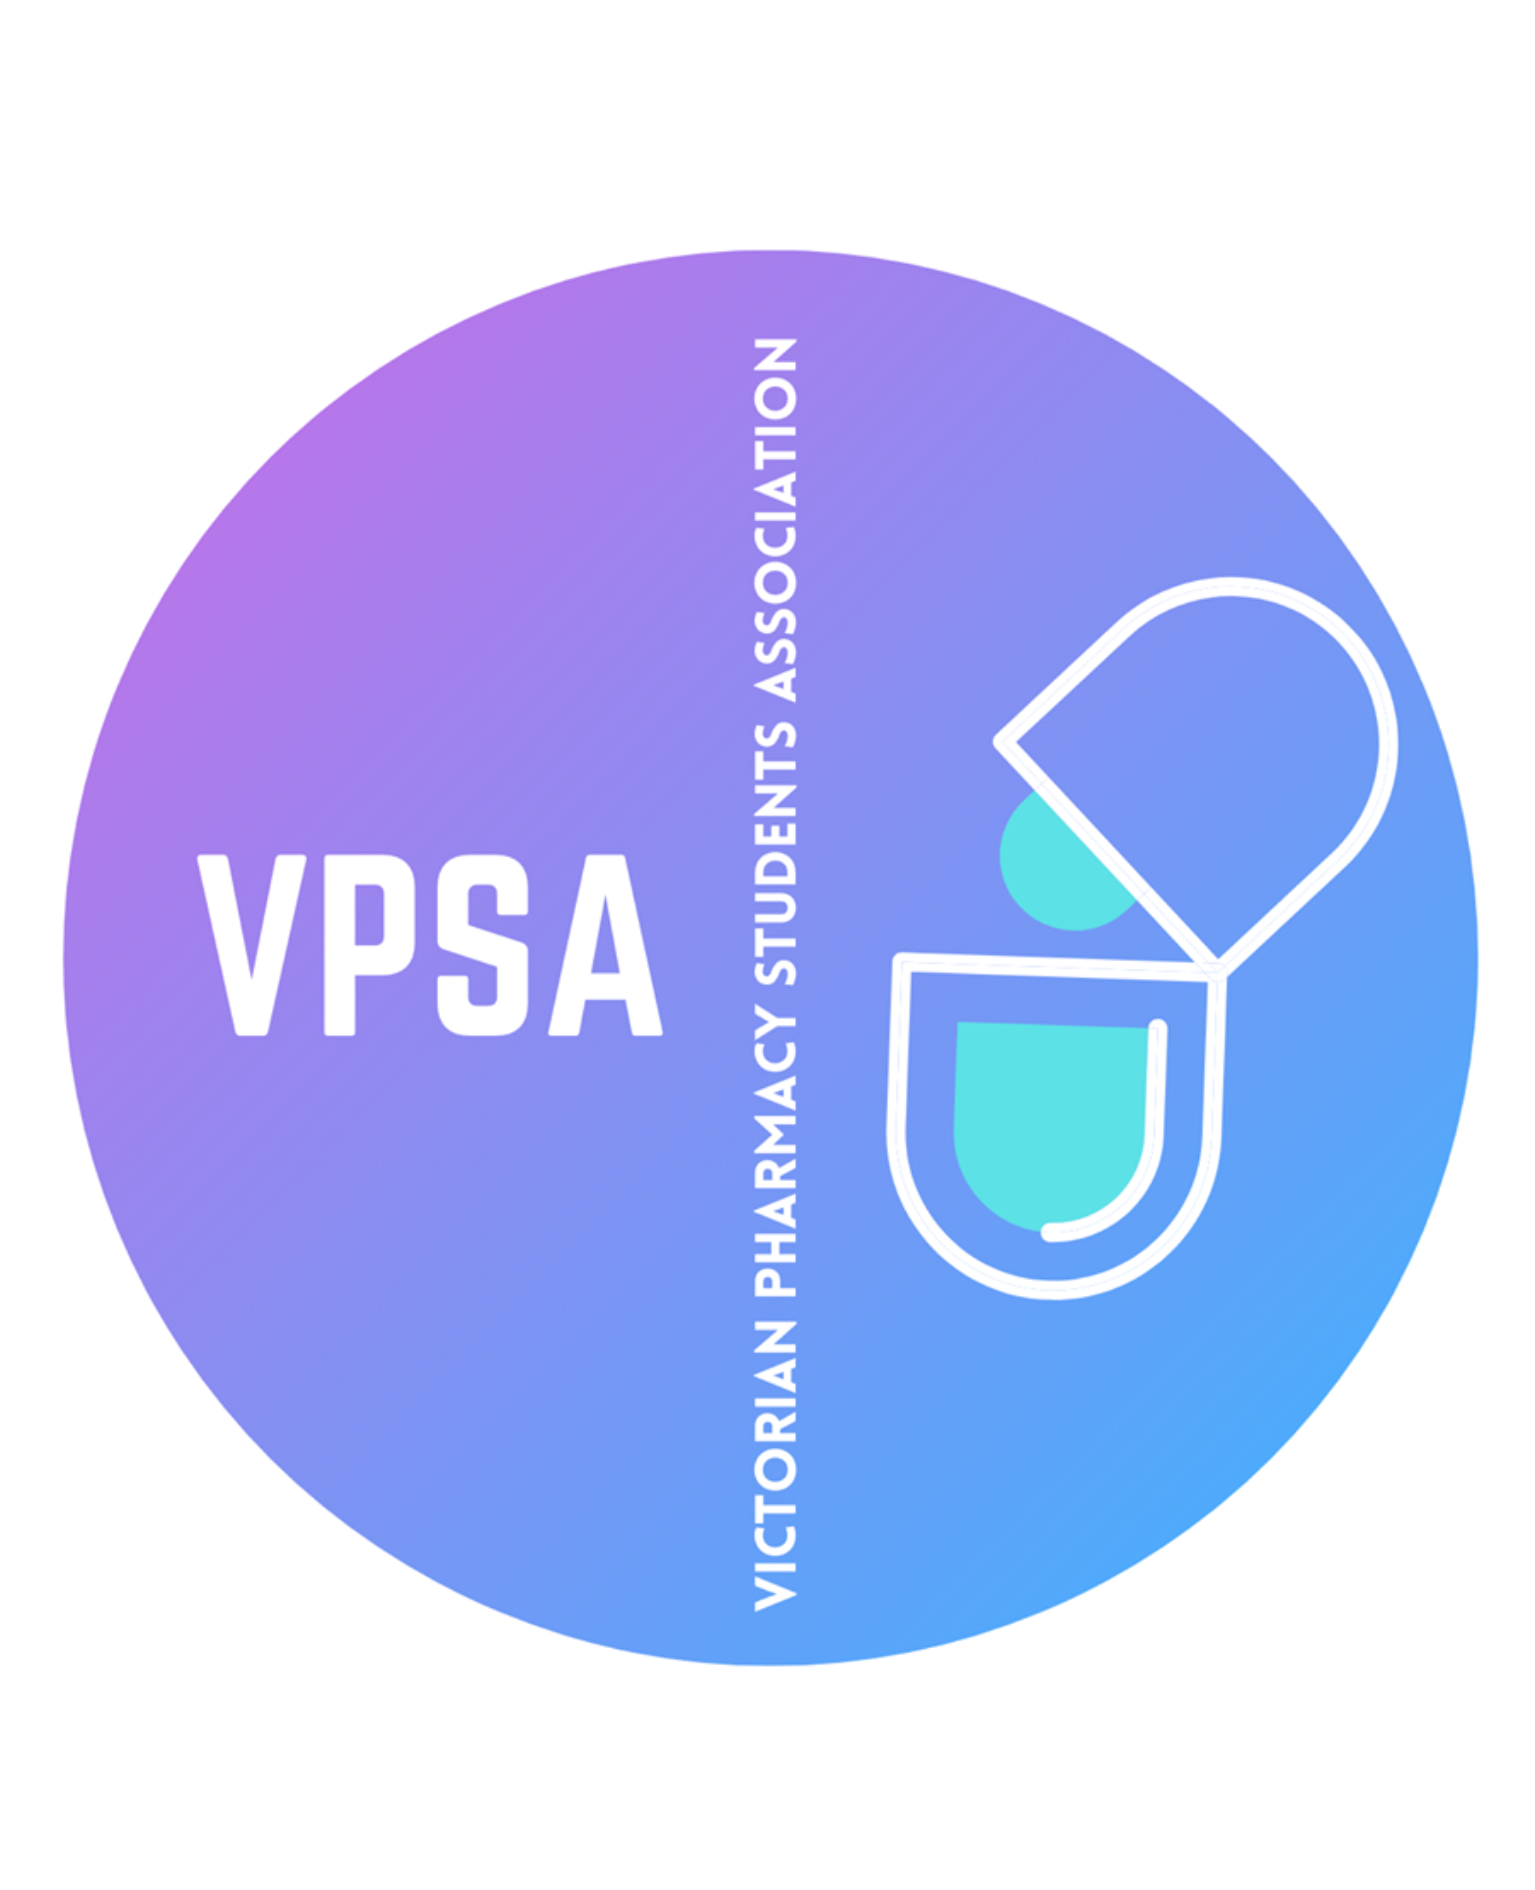 Victorian Pharmacy Students’ Association (VPSA)